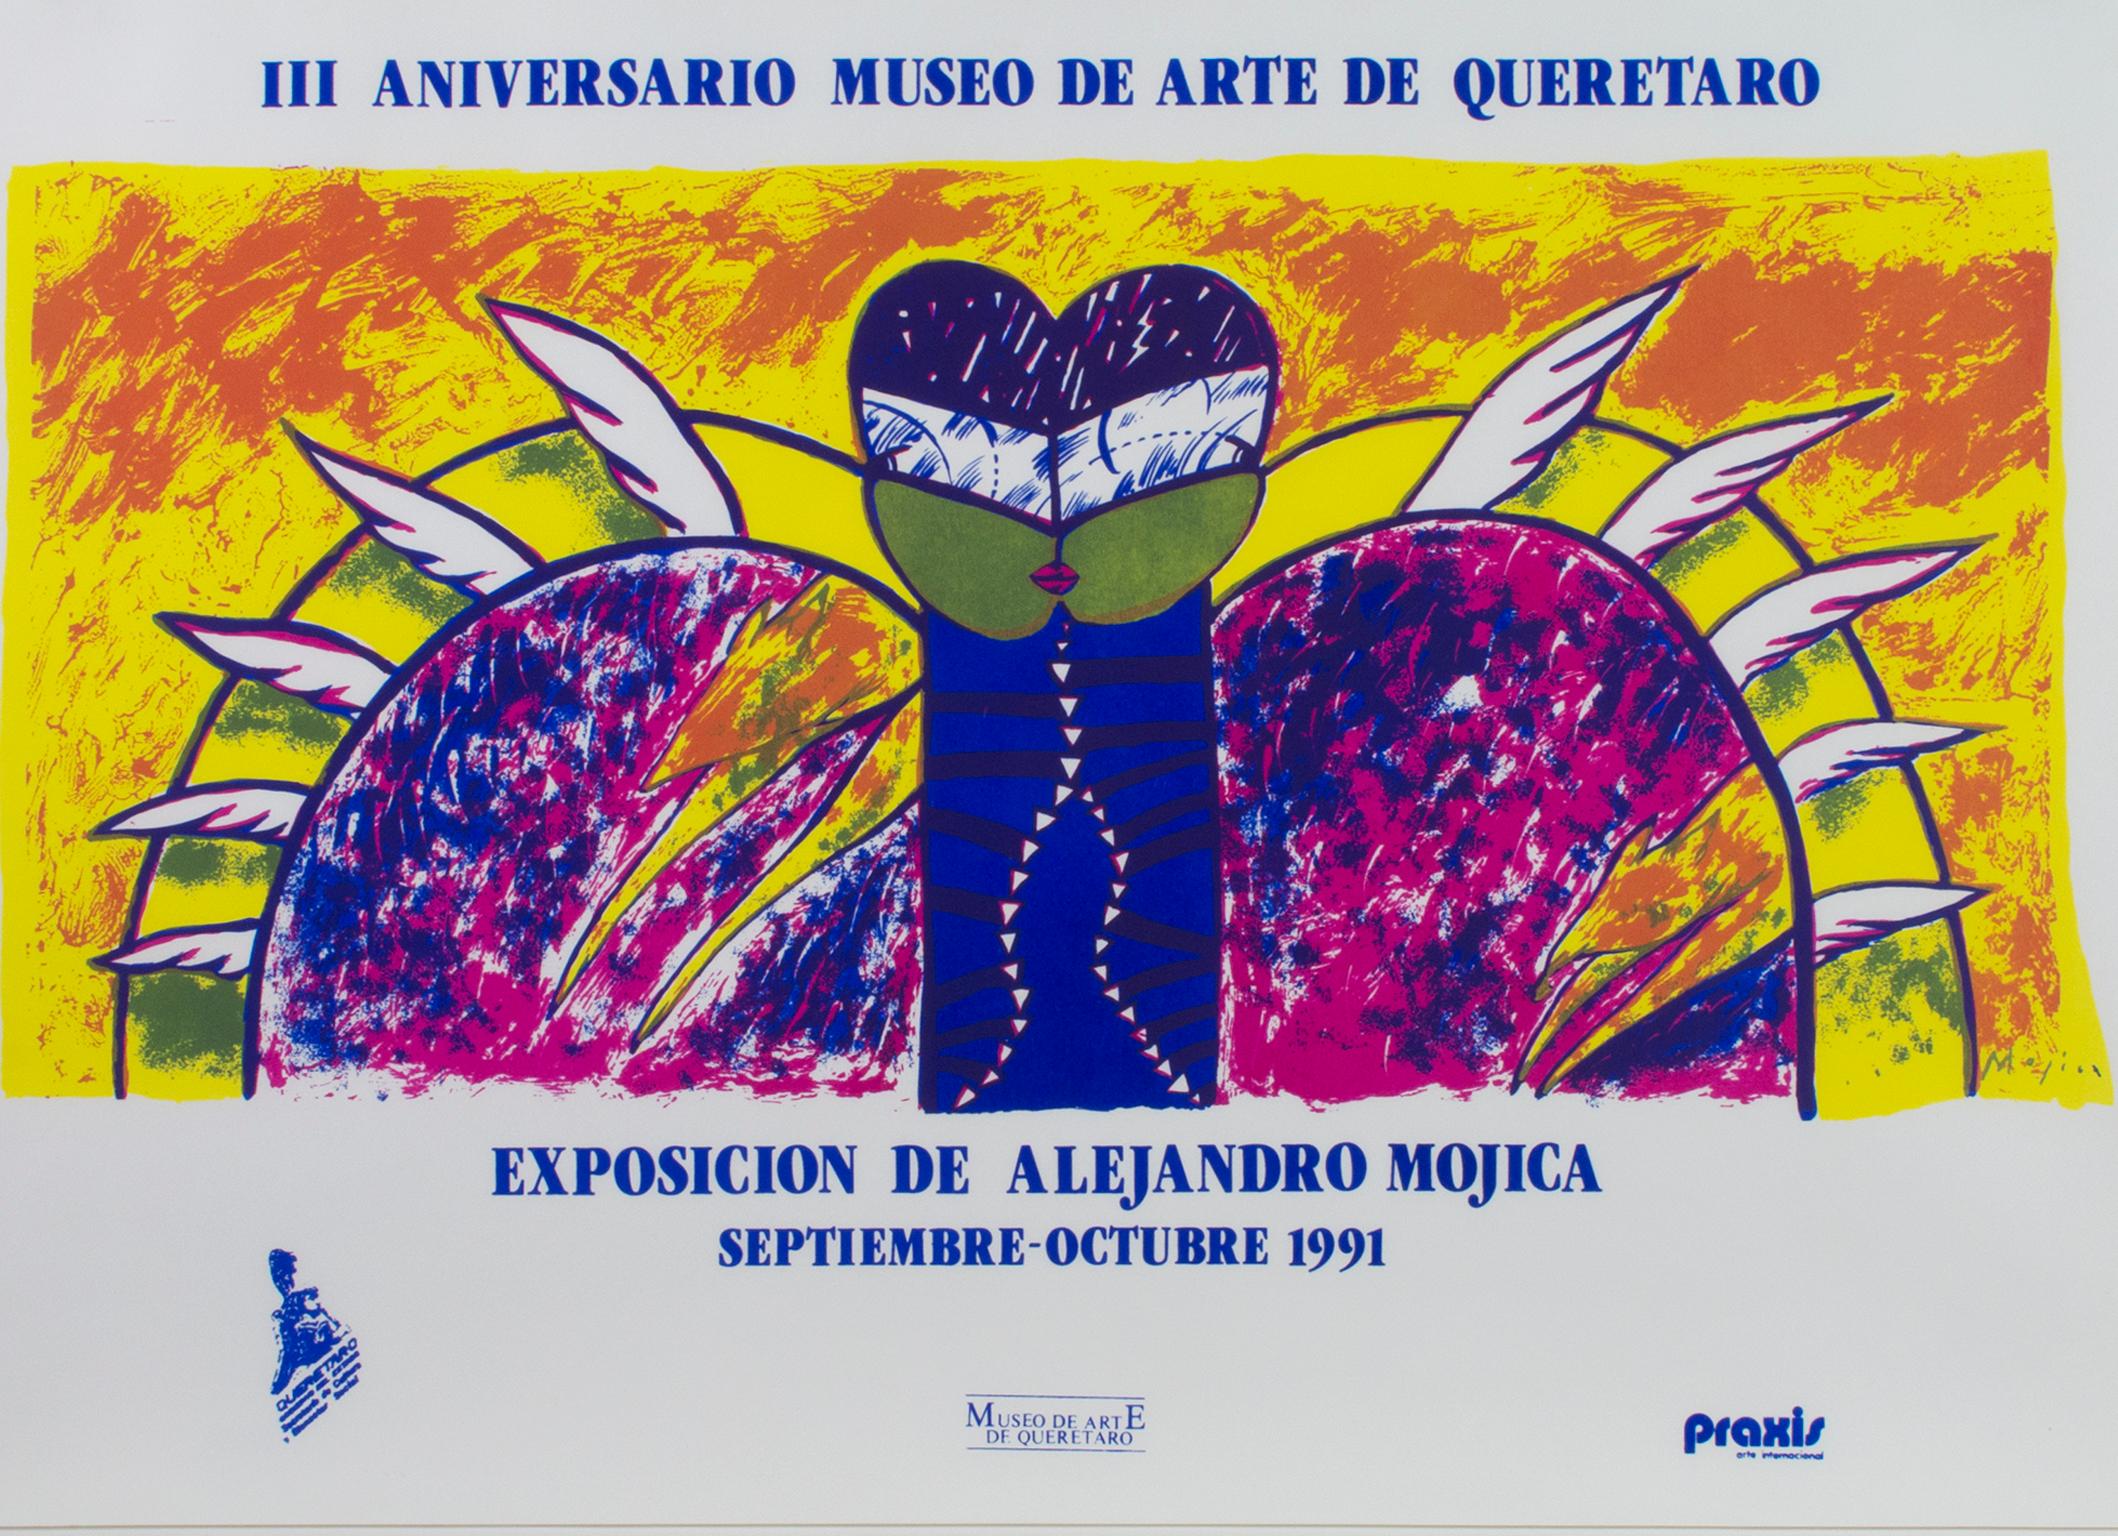 „Exposicion de Alejandro Mojica“, Original-Lithographieplakat